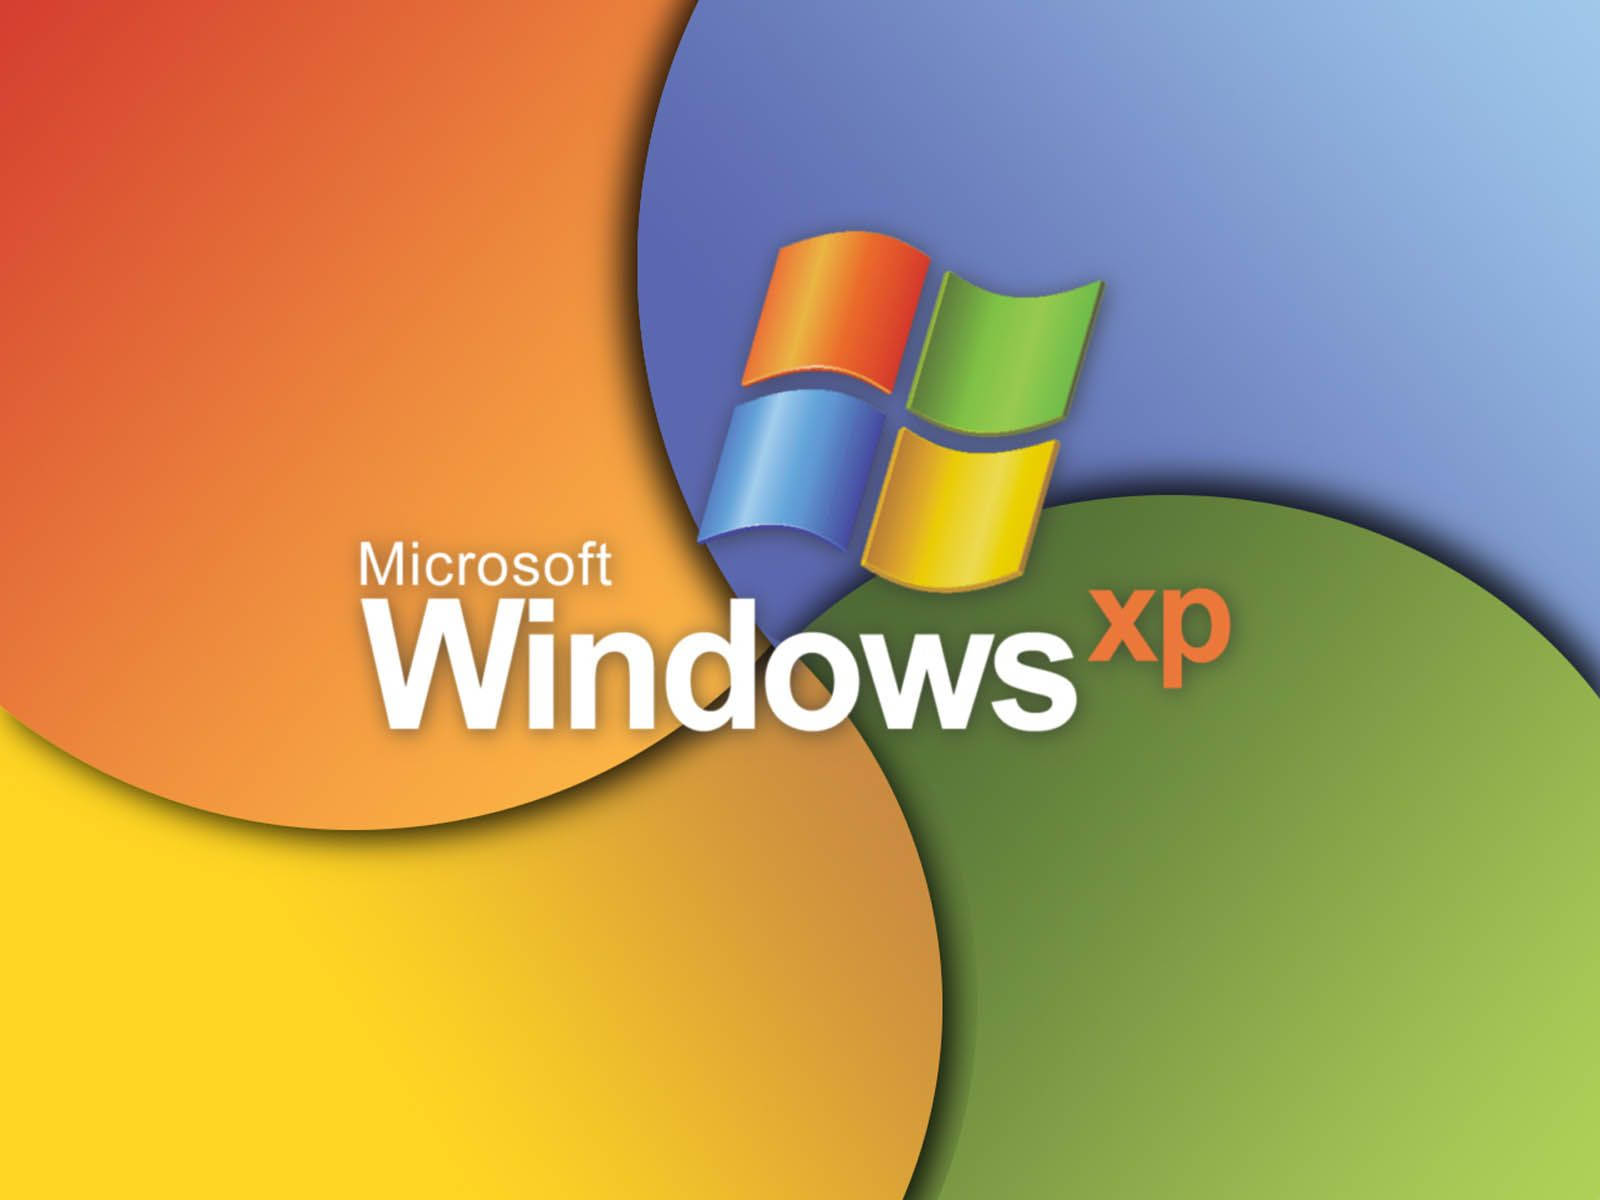 Microsoft Windows Xp Logo With Colorful Circles Wallpaper